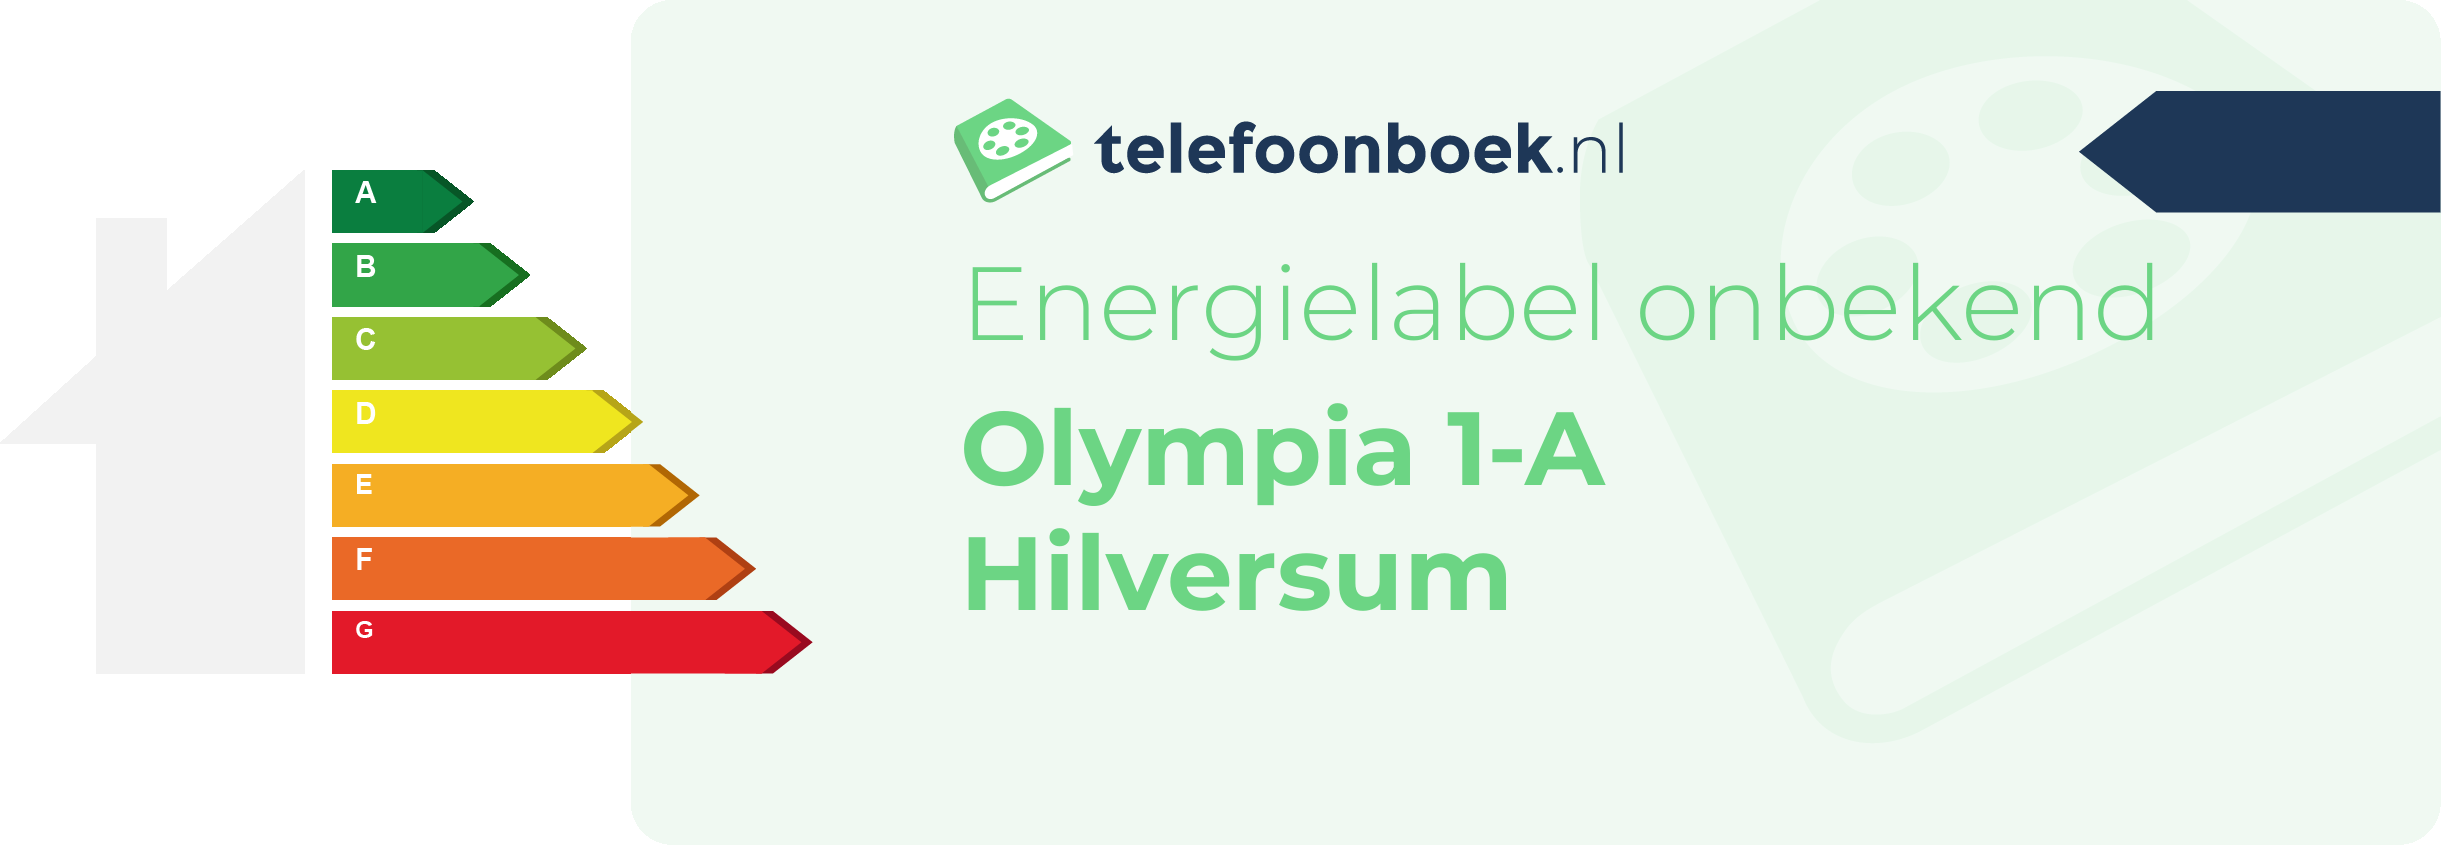 Energielabel Olympia 1-A Hilversum